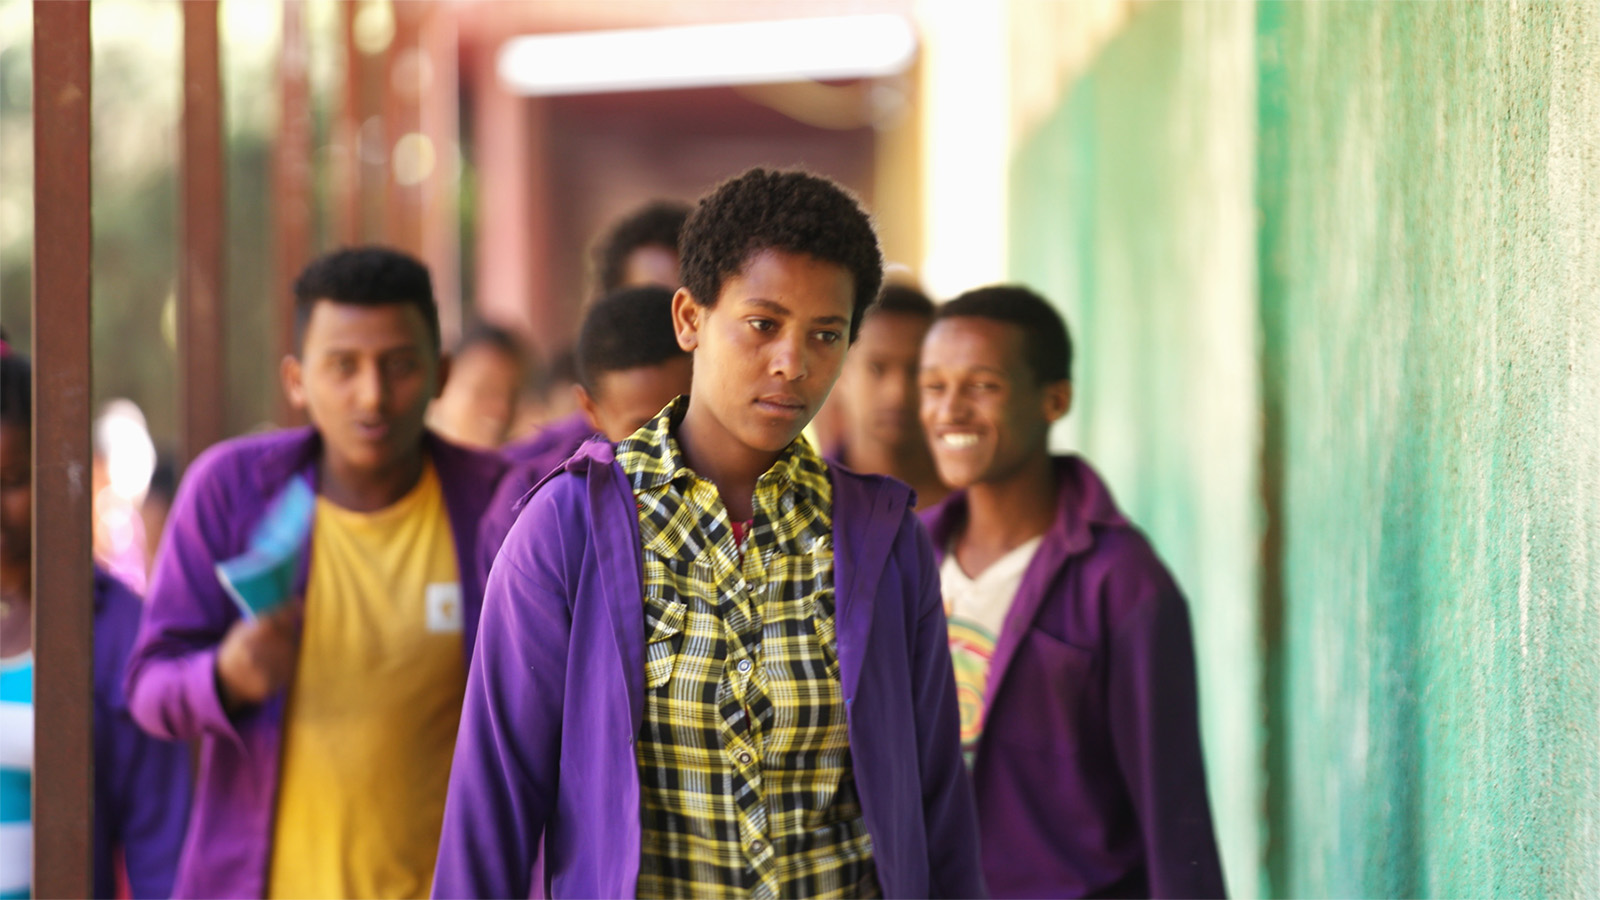 15 Years Stop Childlabour: Ethiopia